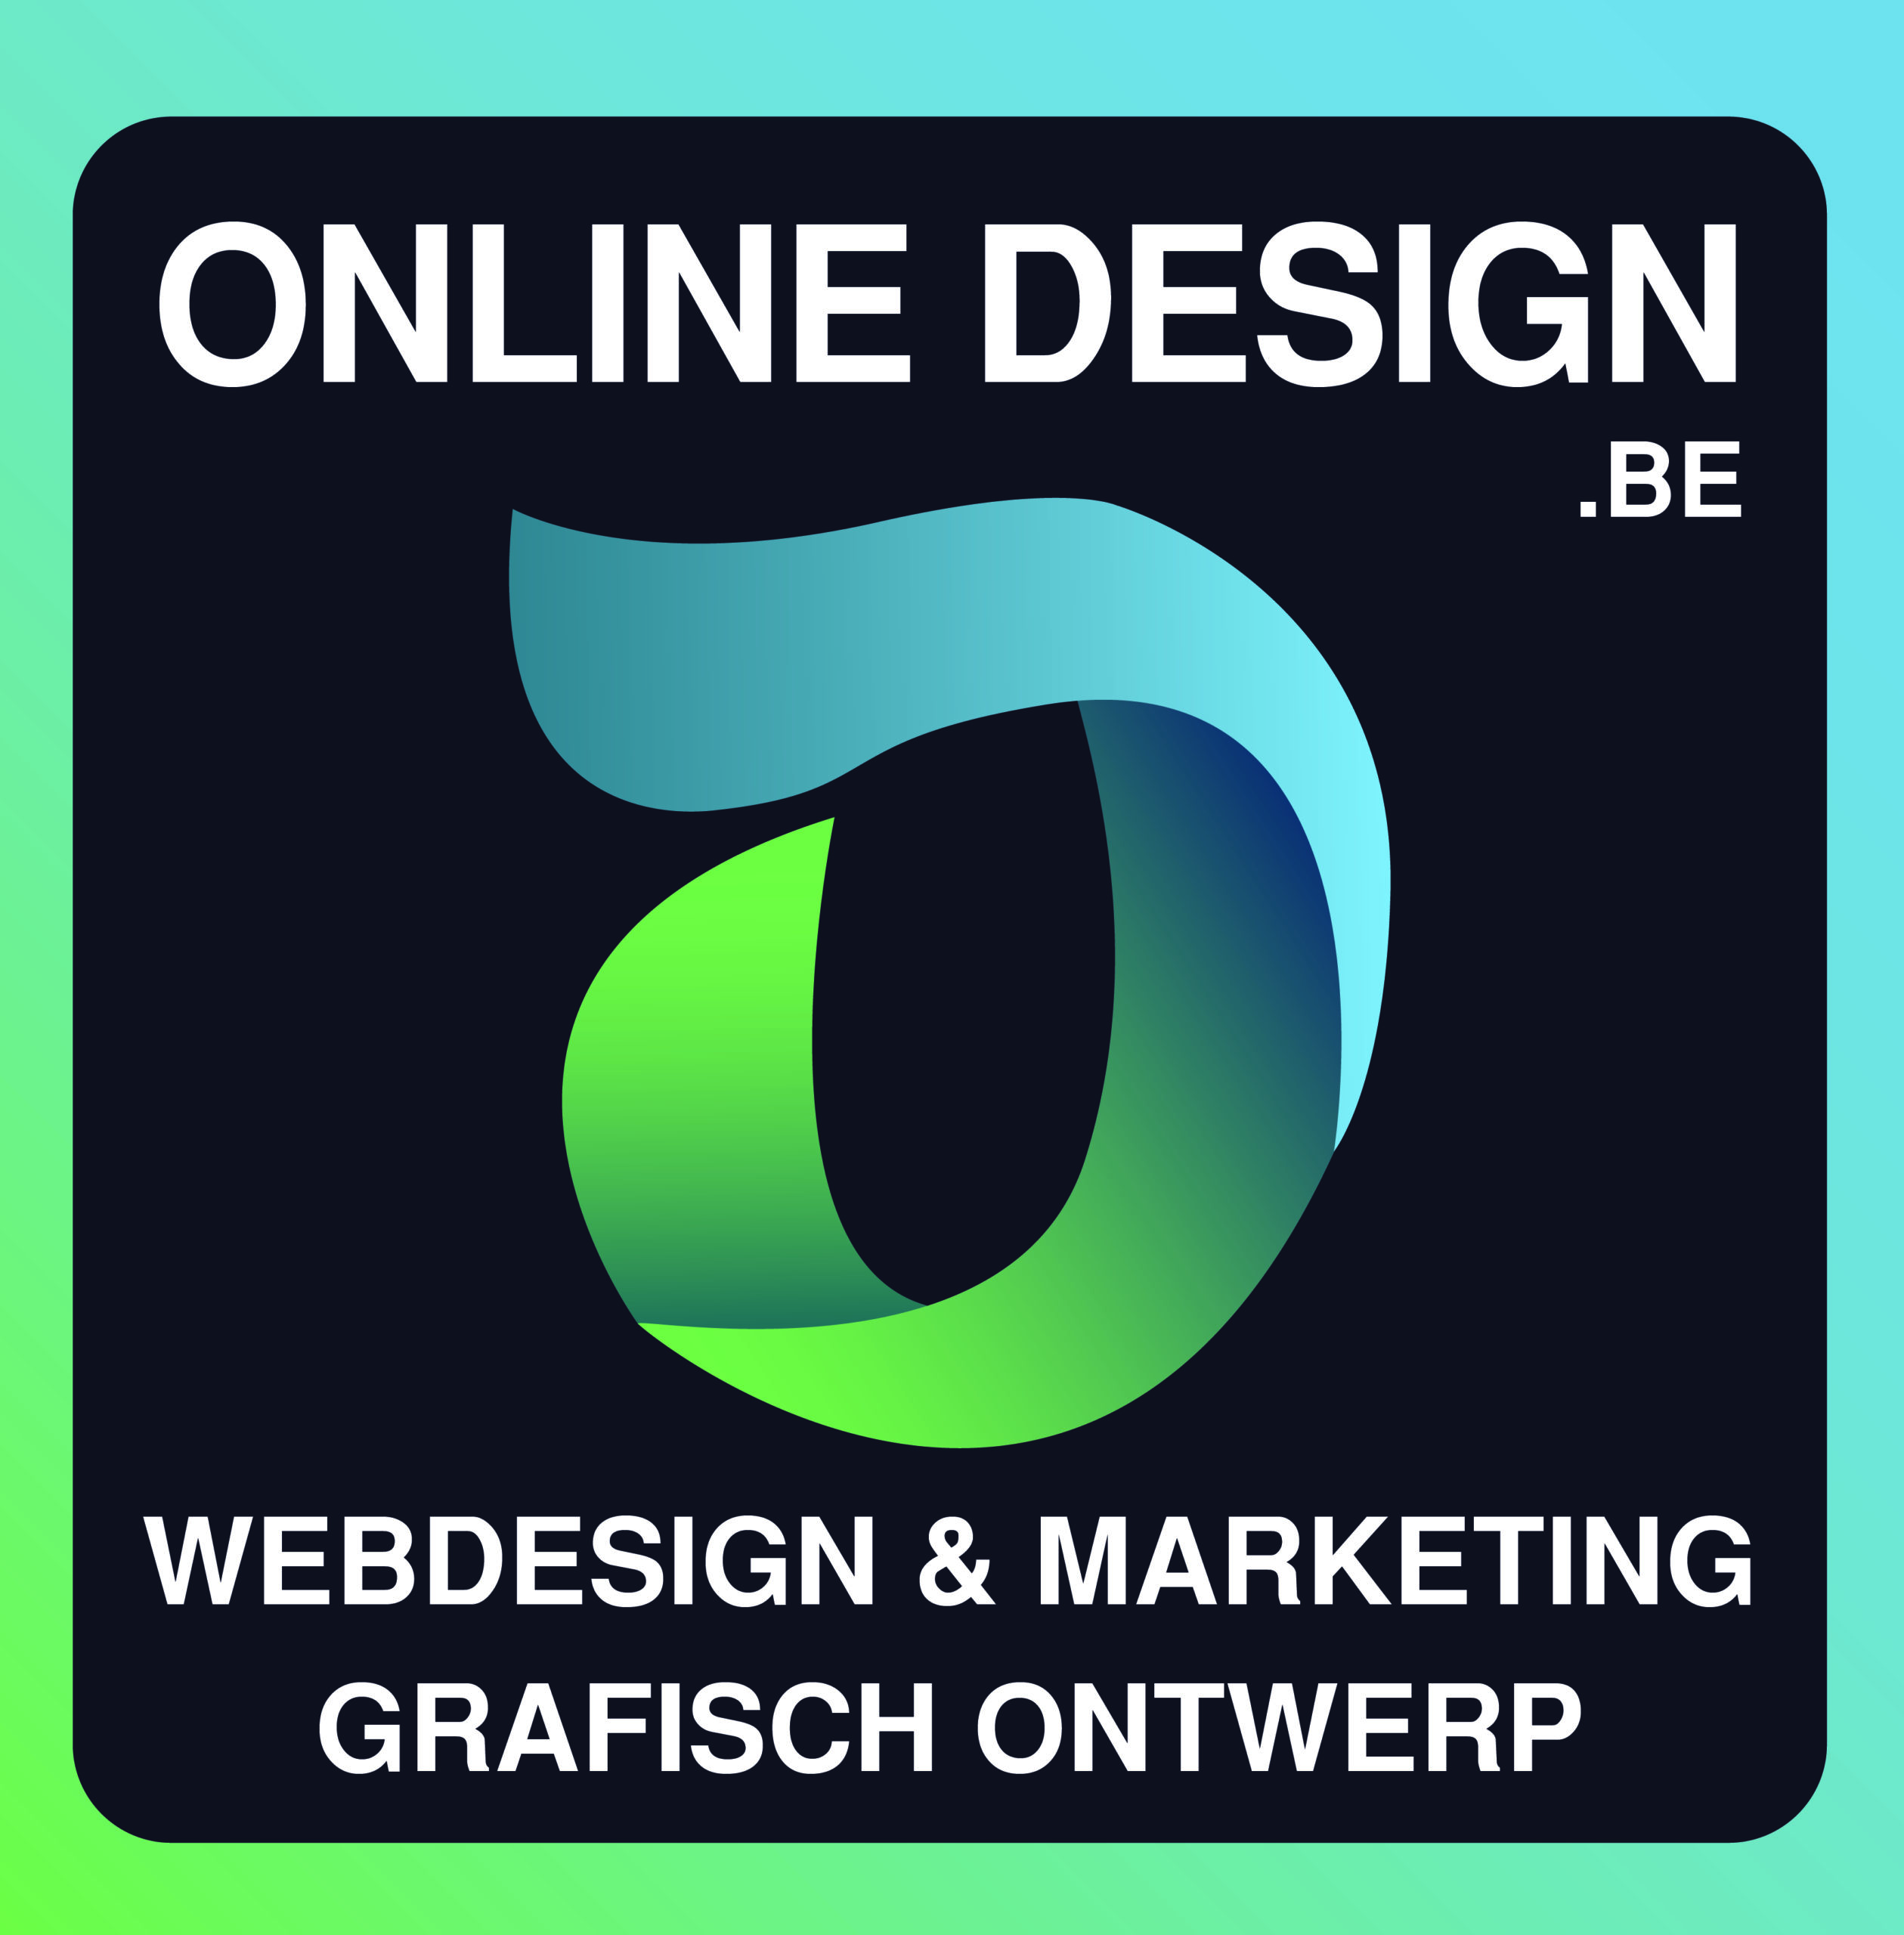 Sponsor Olnine design